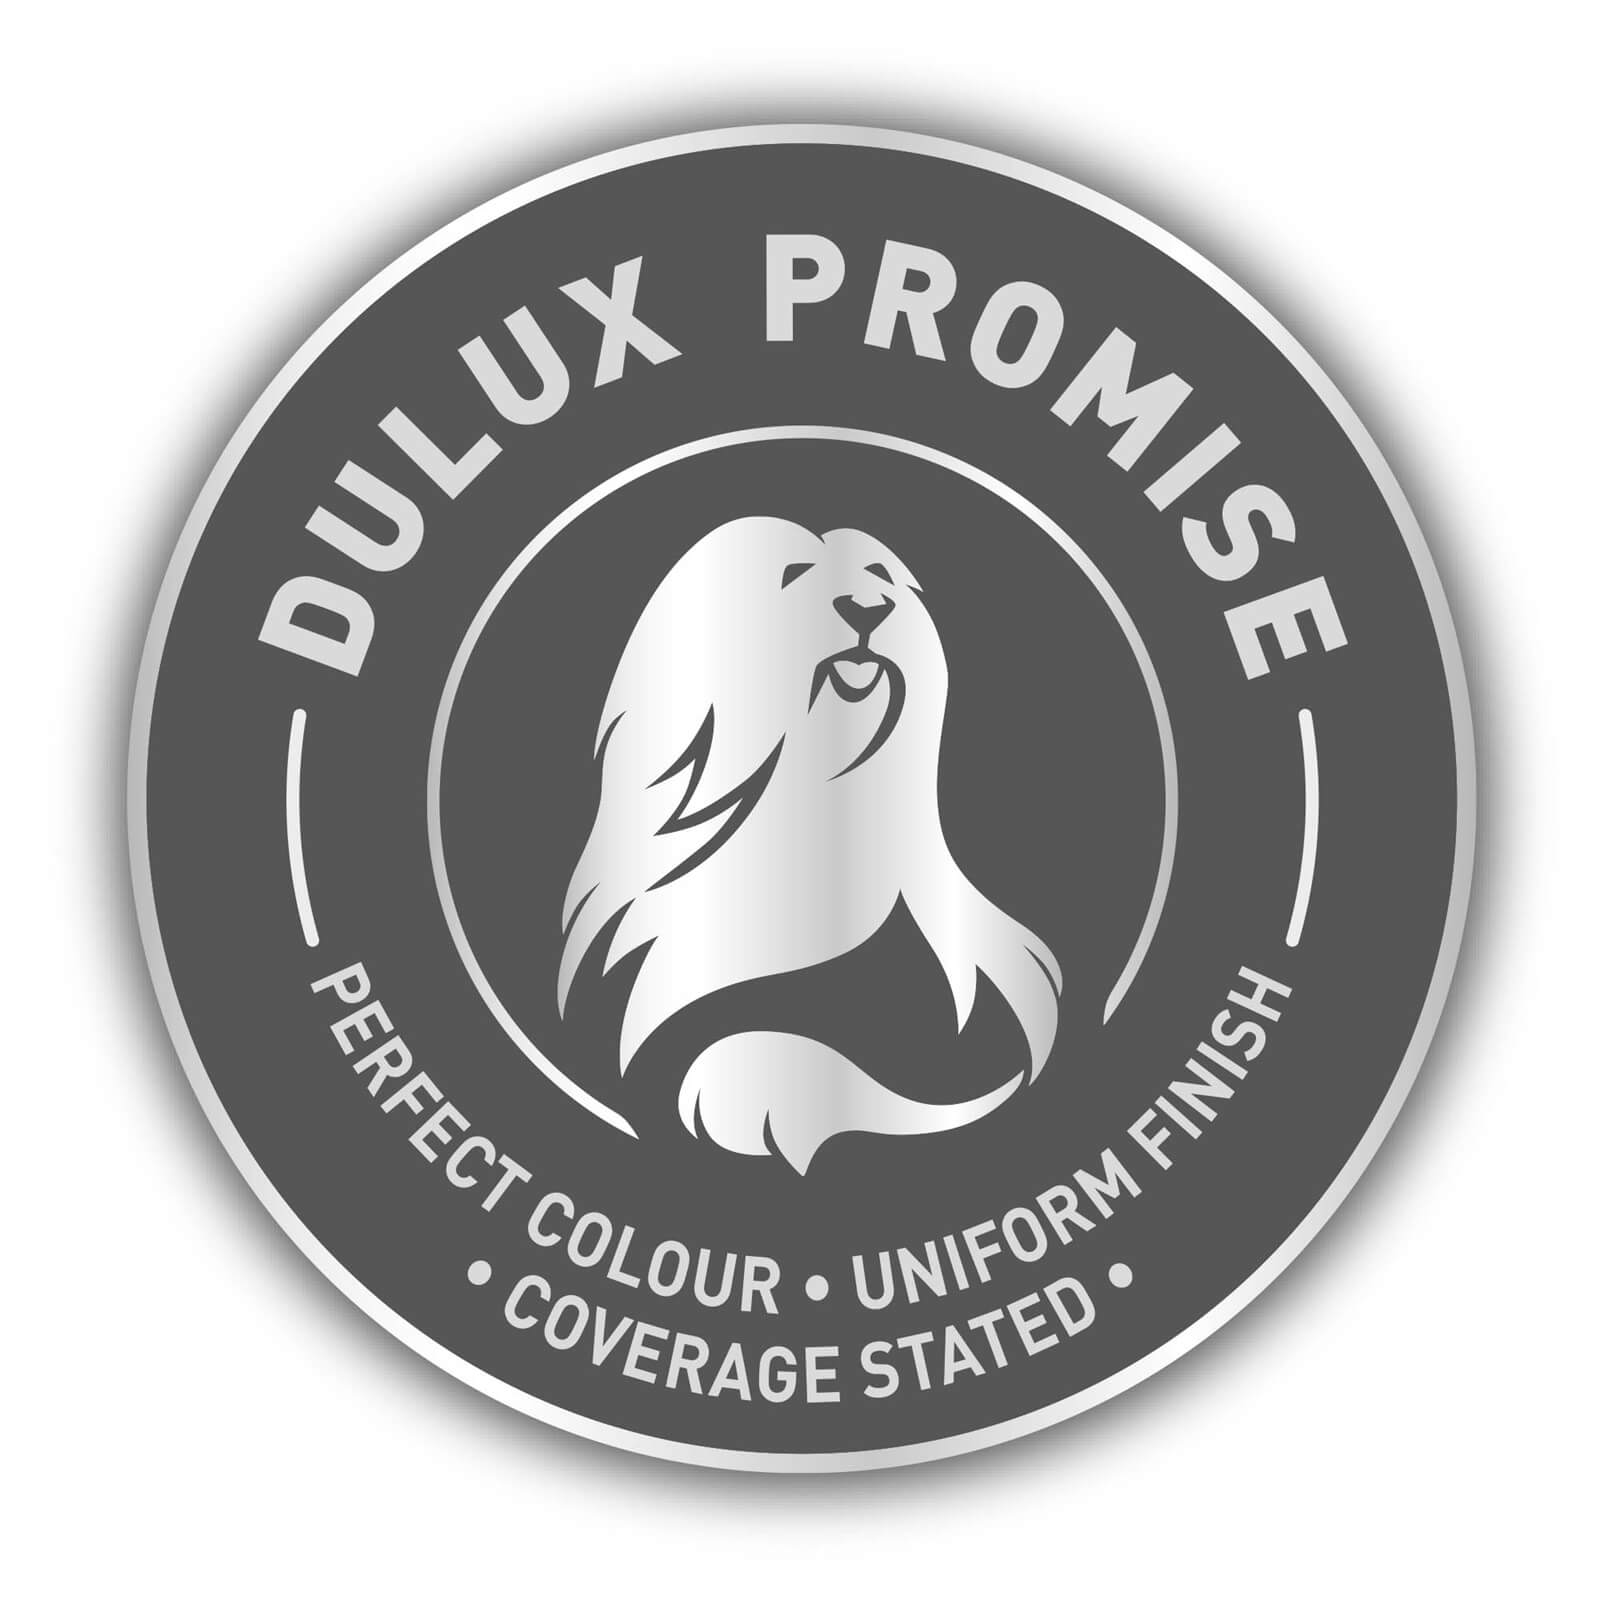 Dulux Matt Emulsion Paint Almond White - 5L